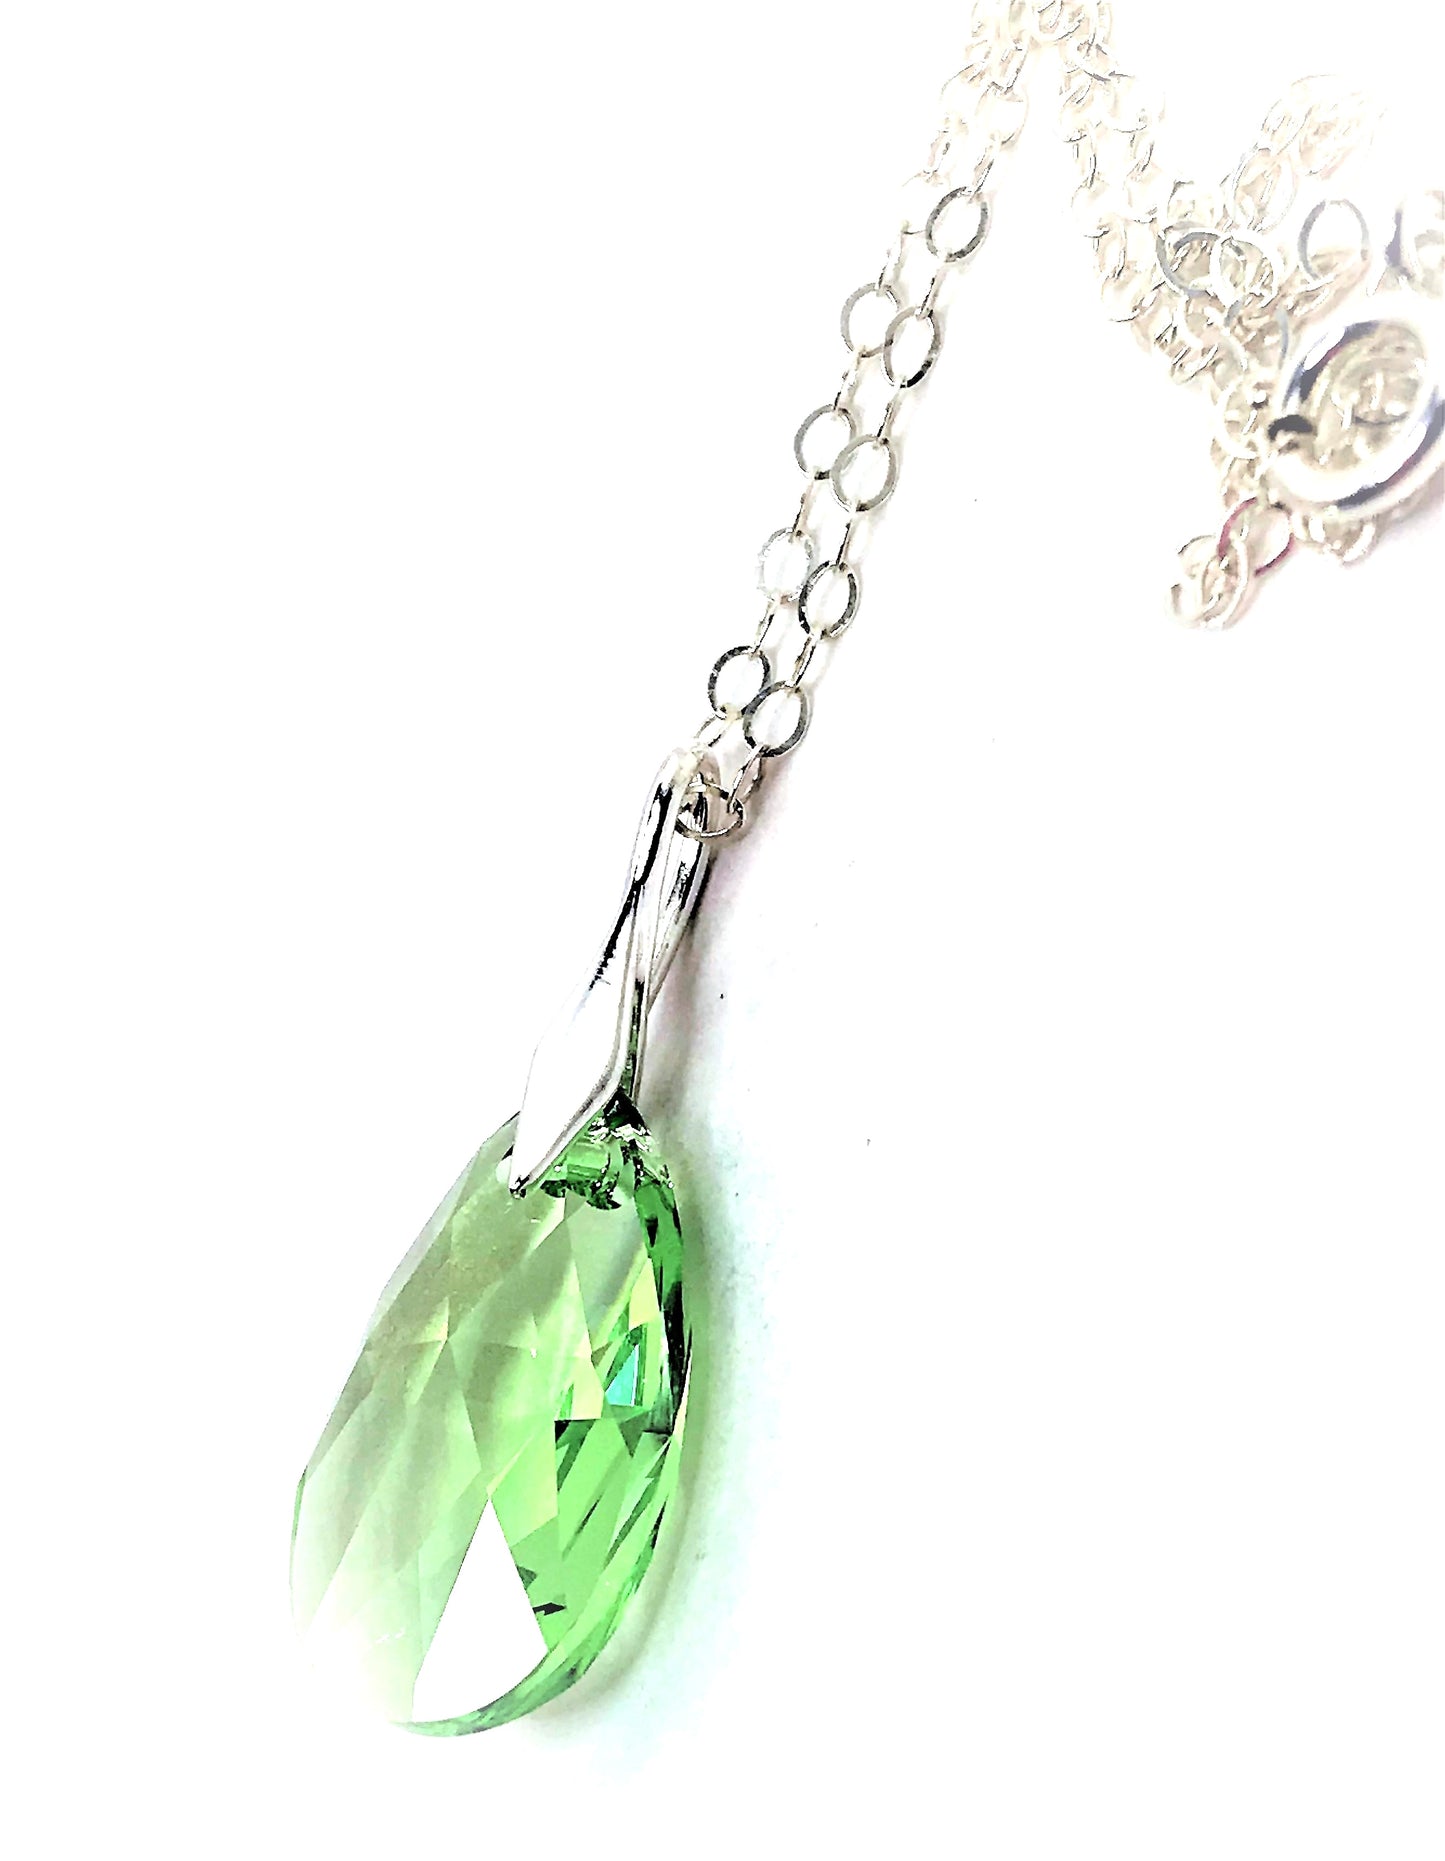 Peridot Green Austrian Crystal Pendant | 925 Sterling Silver | Light Green Teardrop Crystal Necklace for Women